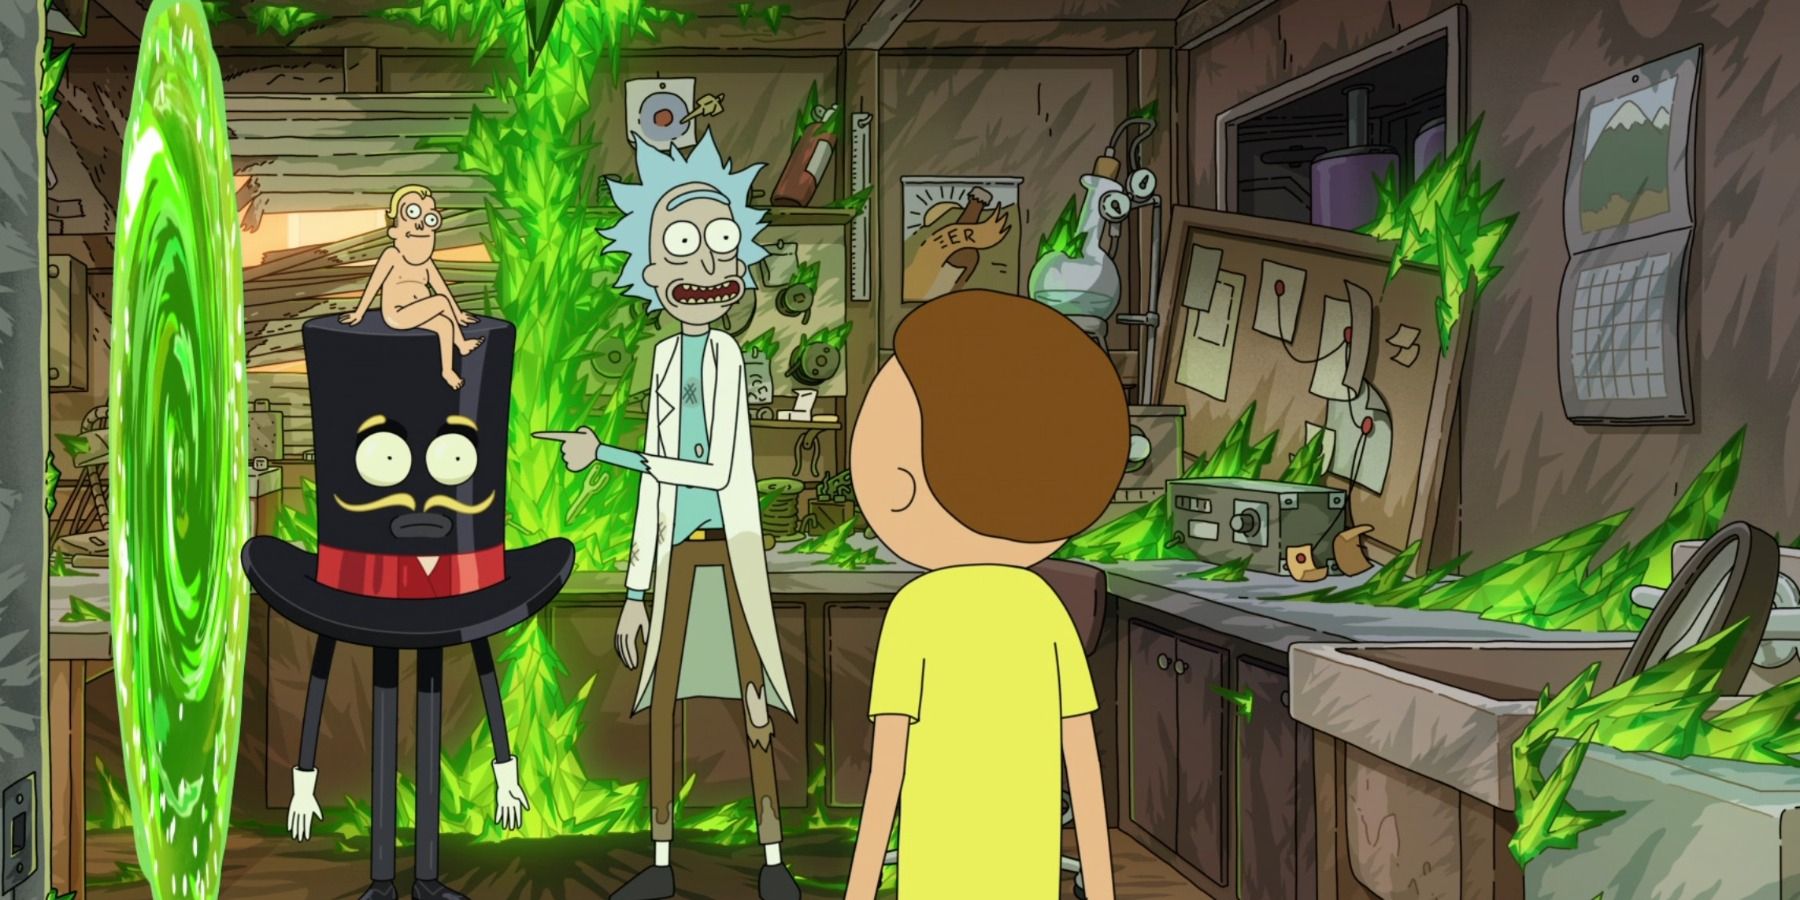 Rick fixes portal gun in Rick and Morty season 6